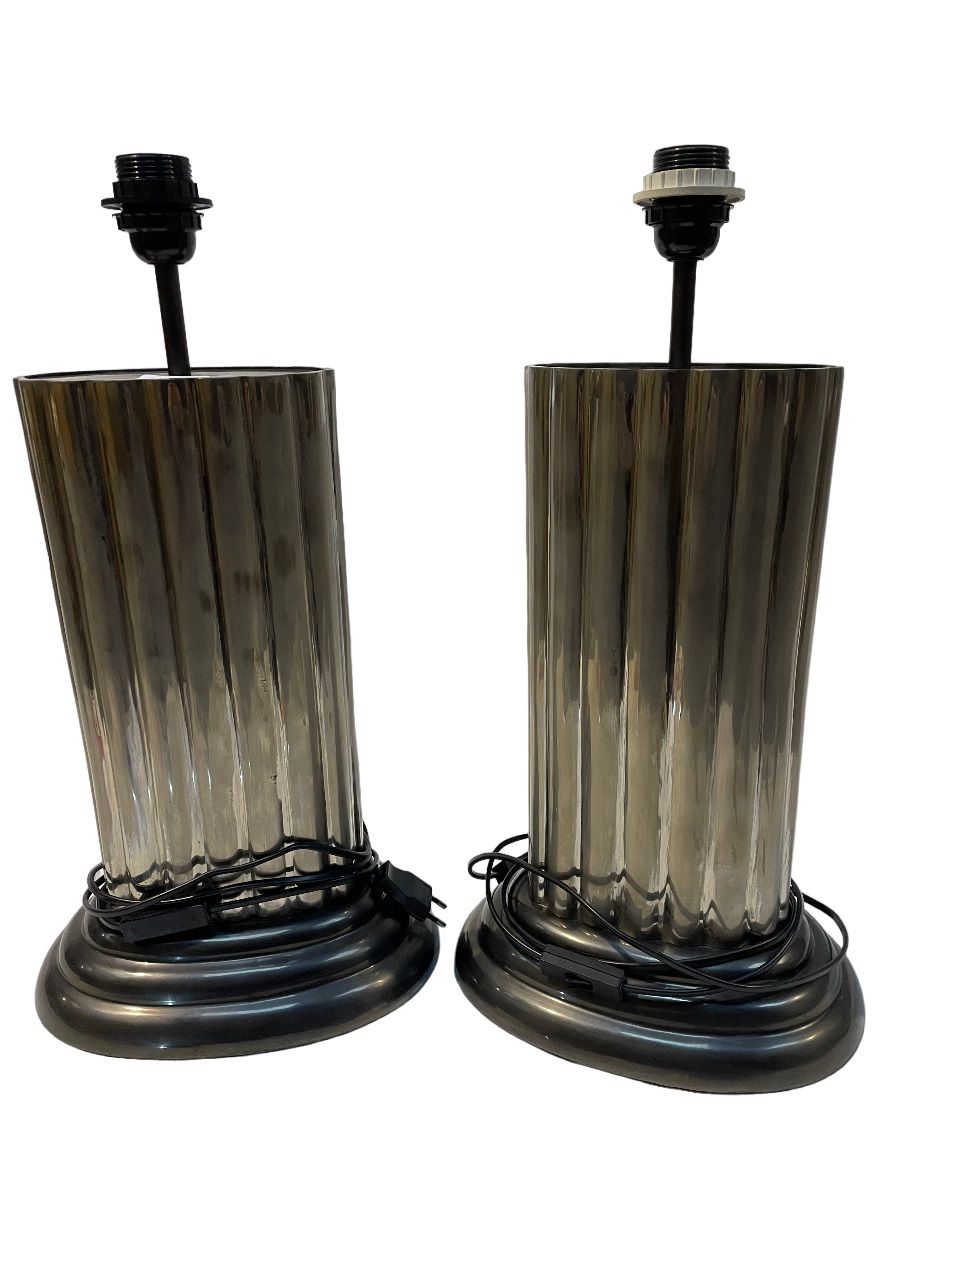 Null 一对镀银凹槽柱形的灯座。
现代美国作品。
高：52厘米。